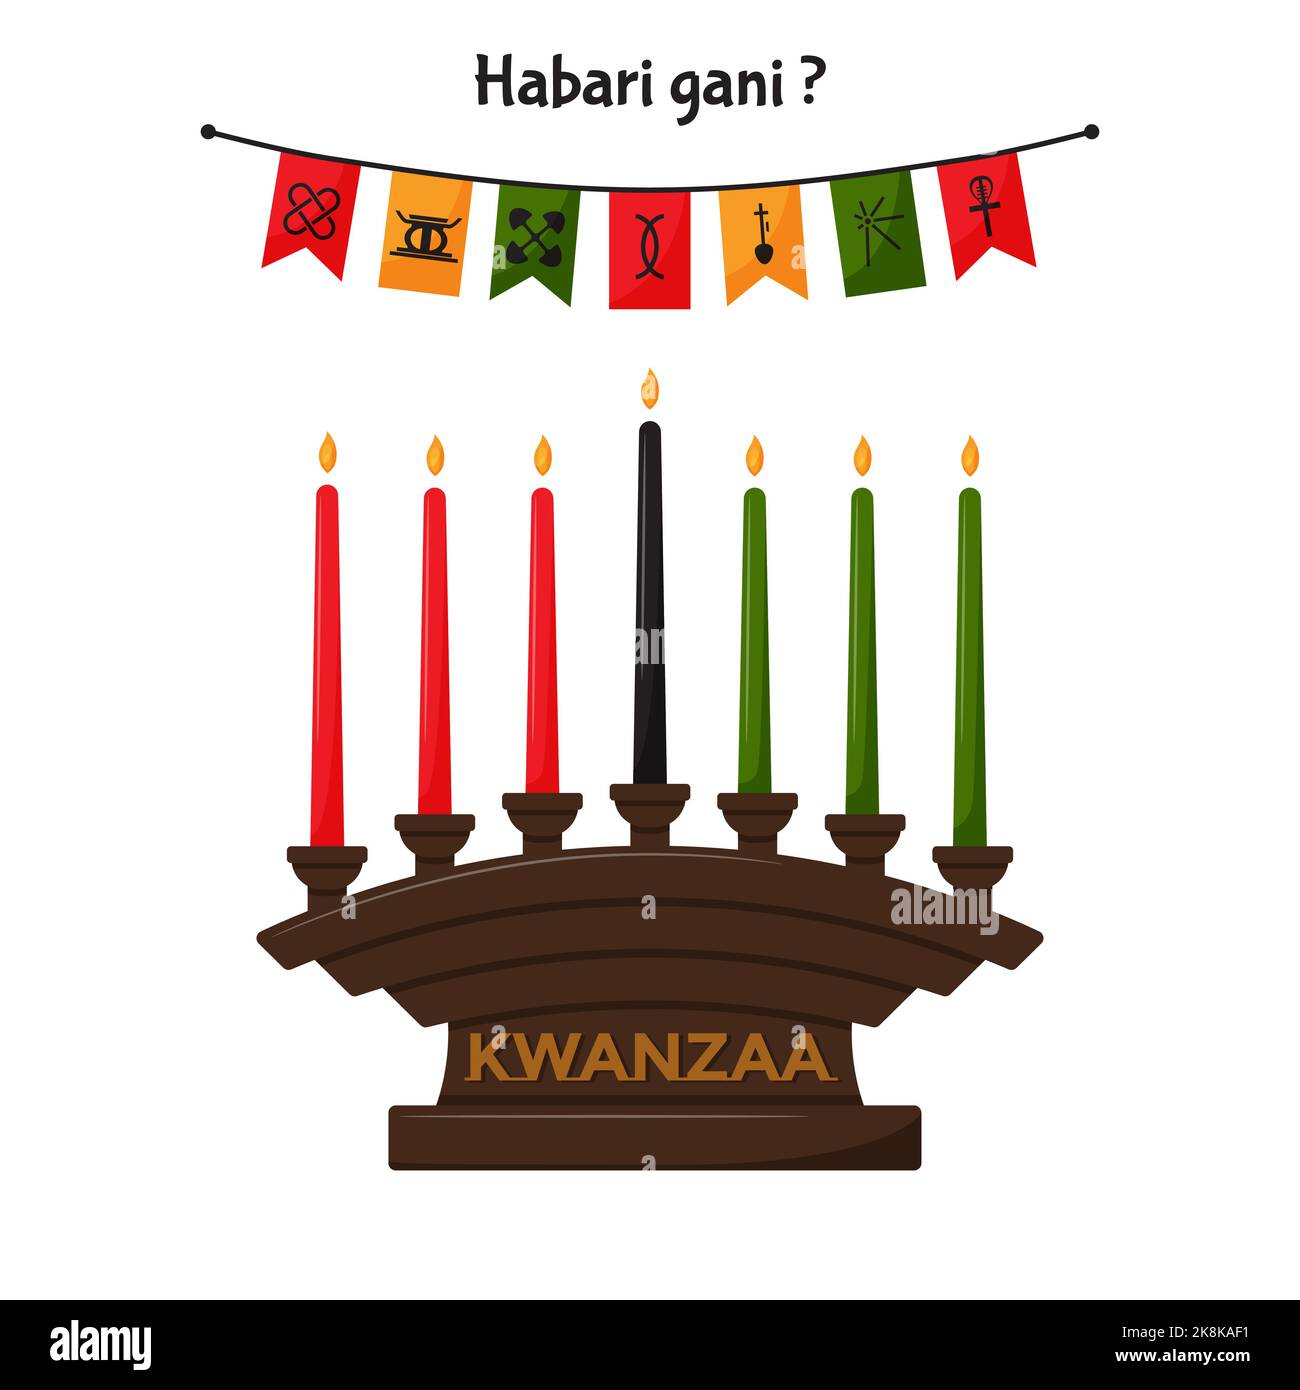 Kinara, a candlestick with 7 traditional Kwanzaa candles. Festive flags with Kwanzaa symbols. Habari Gani - Swahili Translation - What is the news. Fl Stock Vector